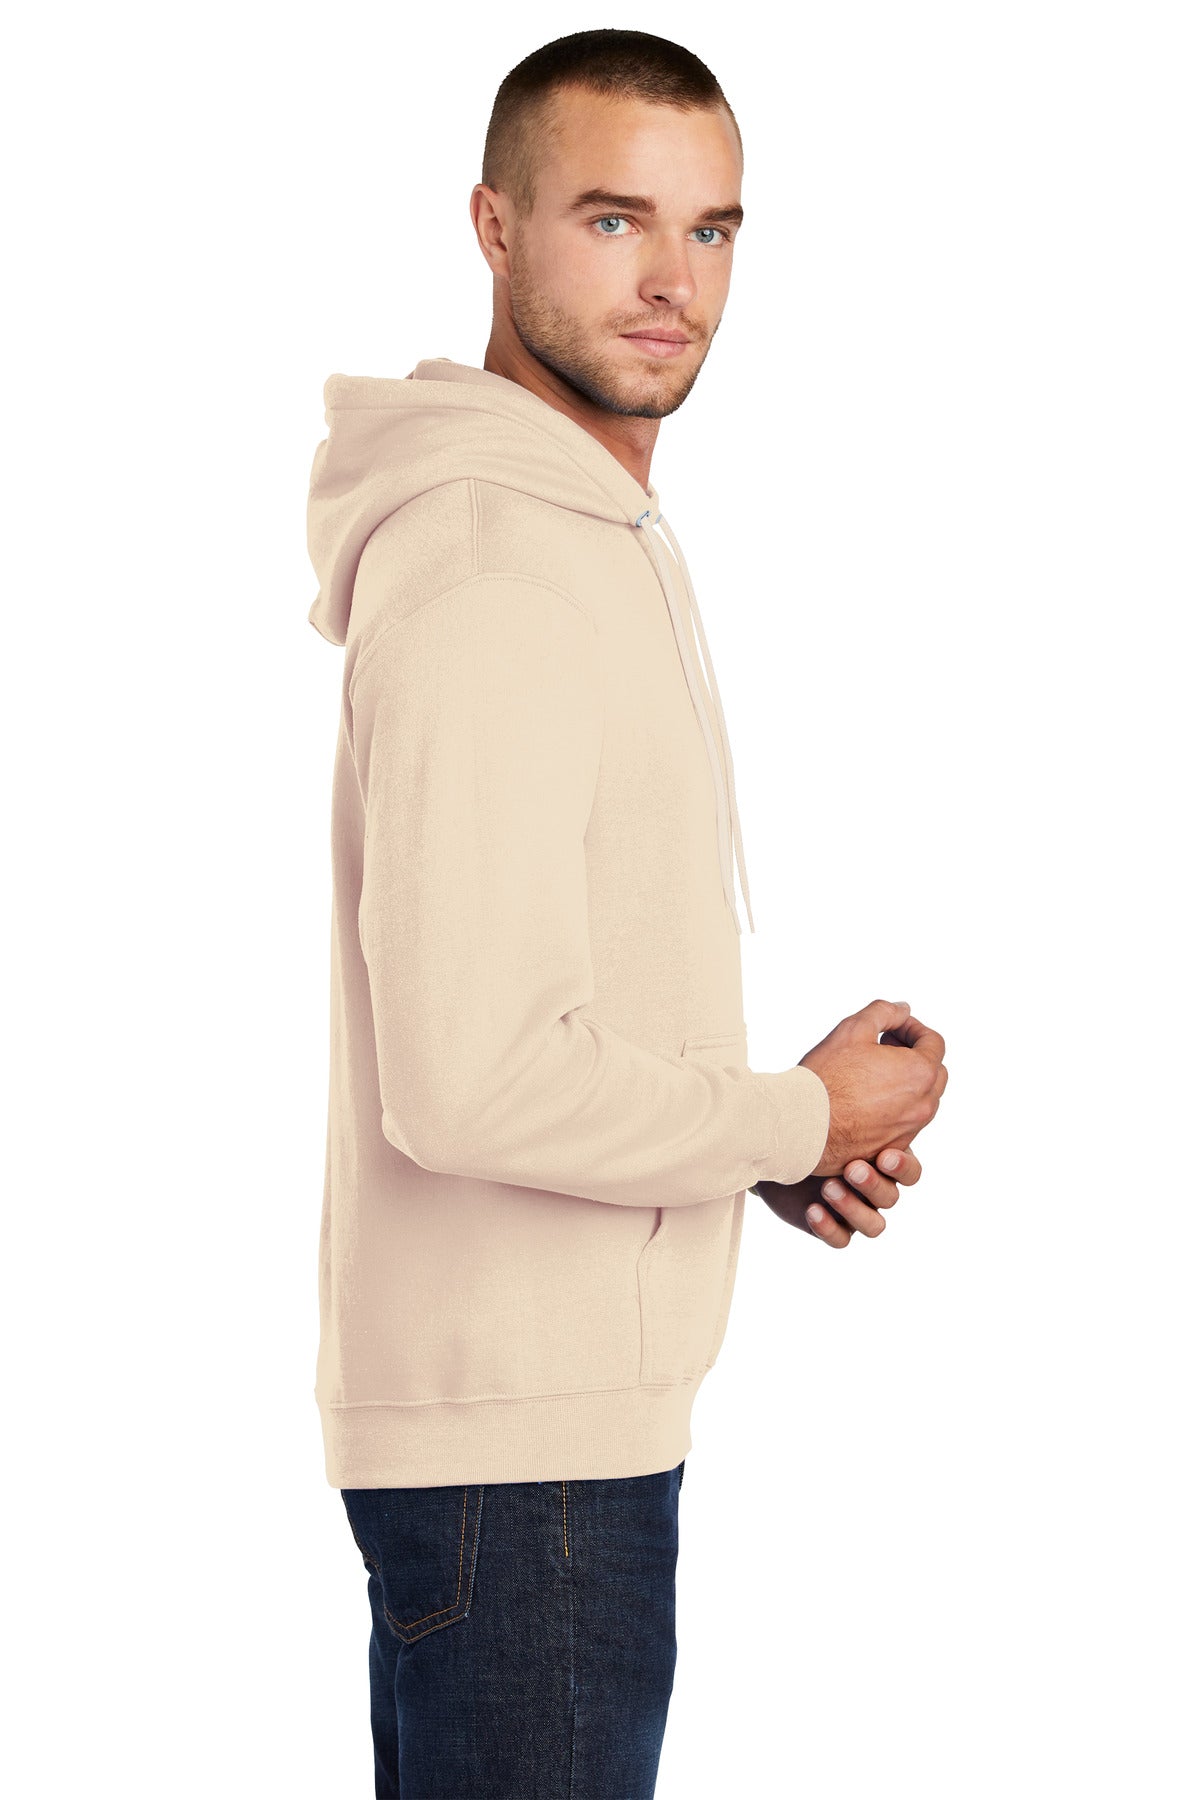 Port & Company - Core Fleece Pullover Hooded Sweatshirt. PC78H - Creme